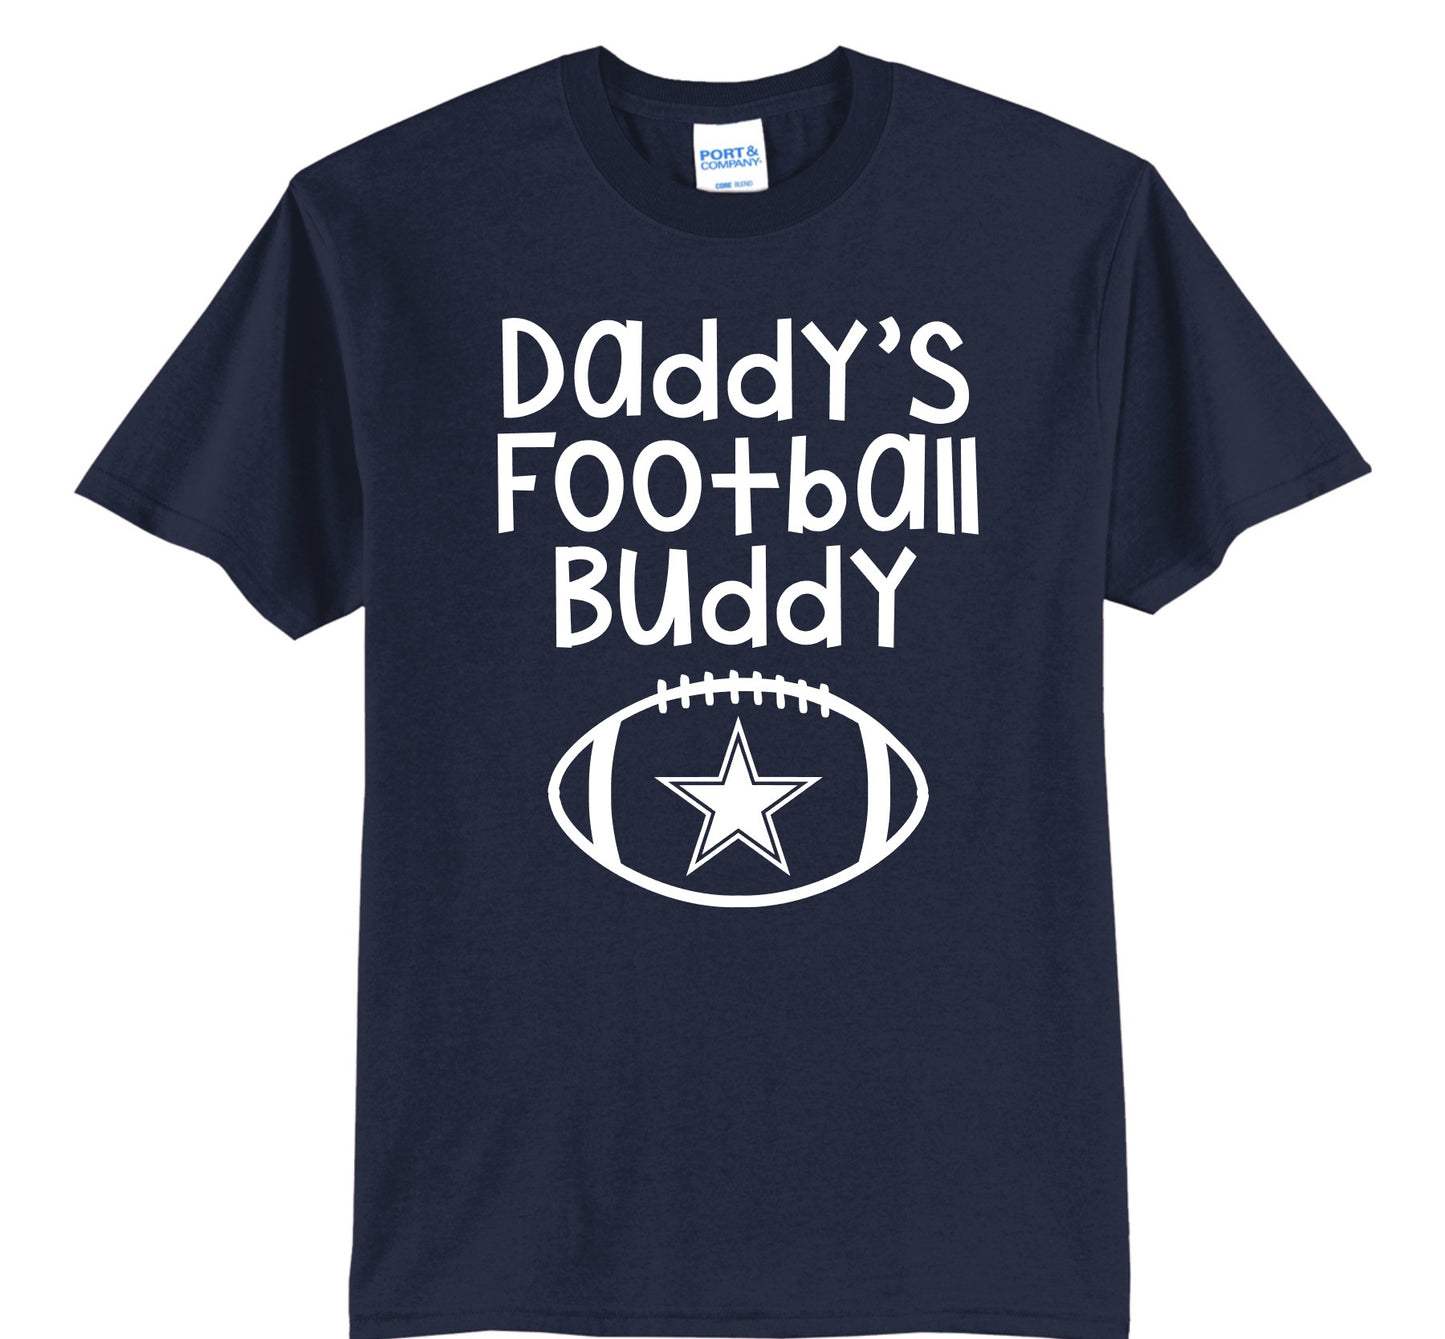 Daddy's Football Buddy Toddler